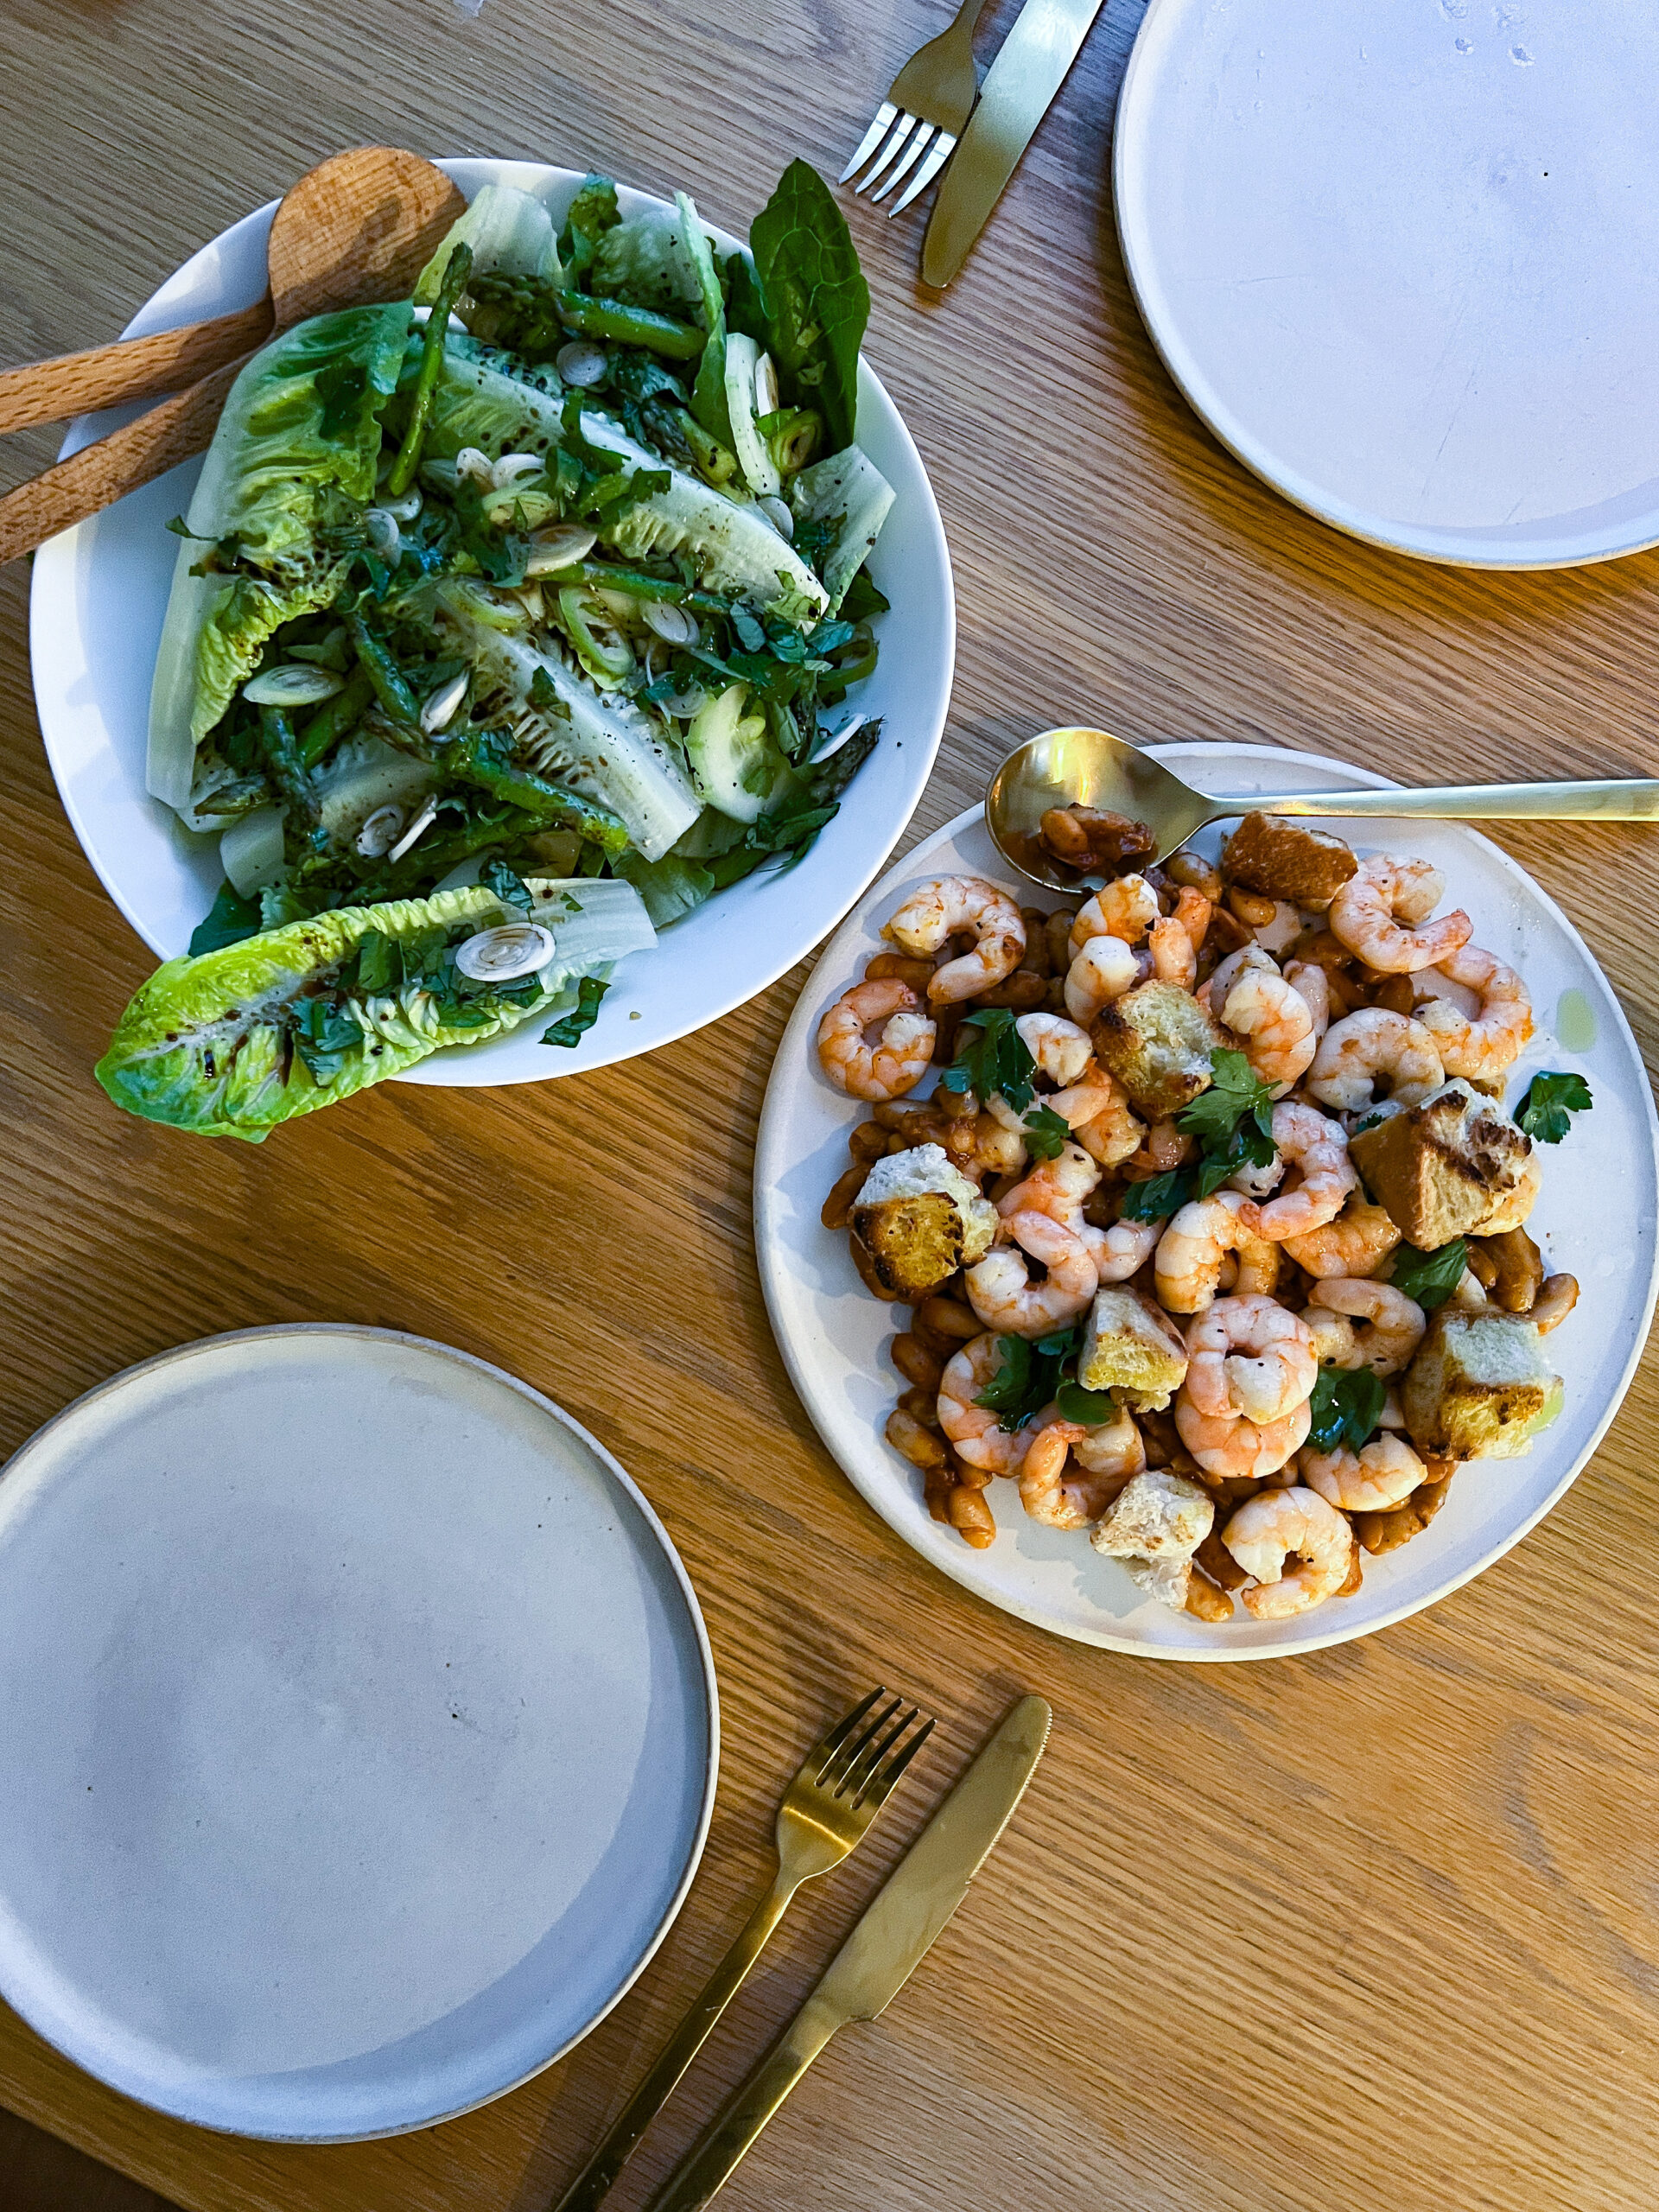 Cook from the book: Jamie Oliver's 5 Ingredients Mediterranean